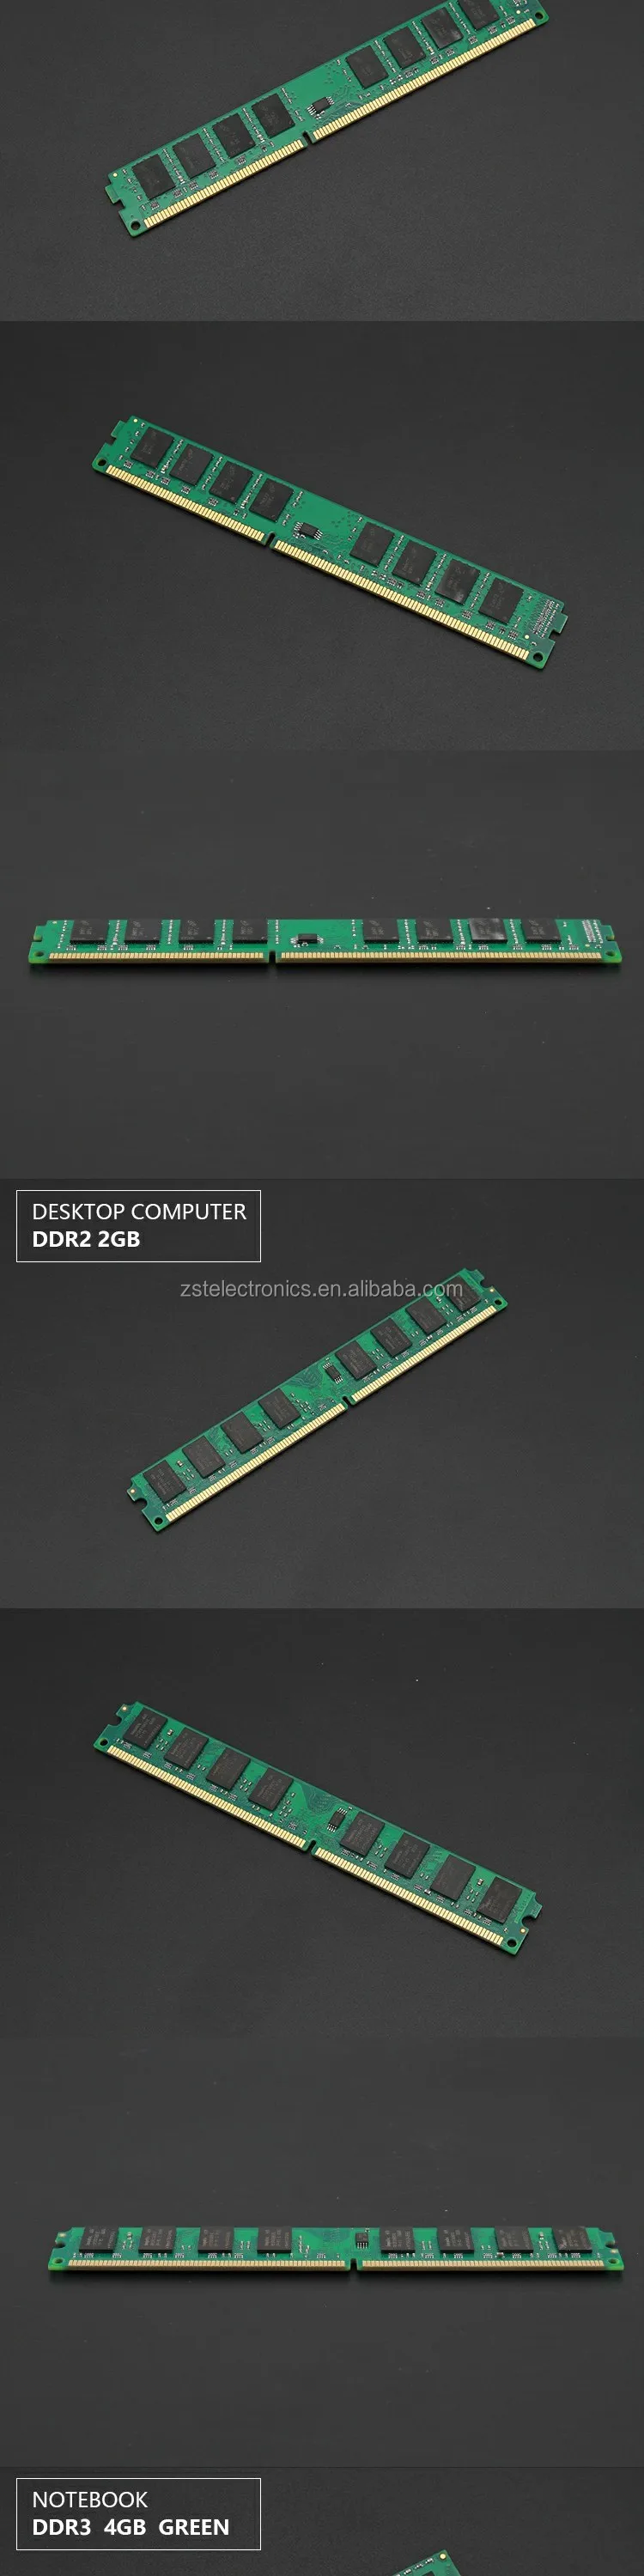 Ram Ddr3 8 Gb Laptop Memory Ddr3 - Buy Intel G41 Ddr3 Motherboard,Ram